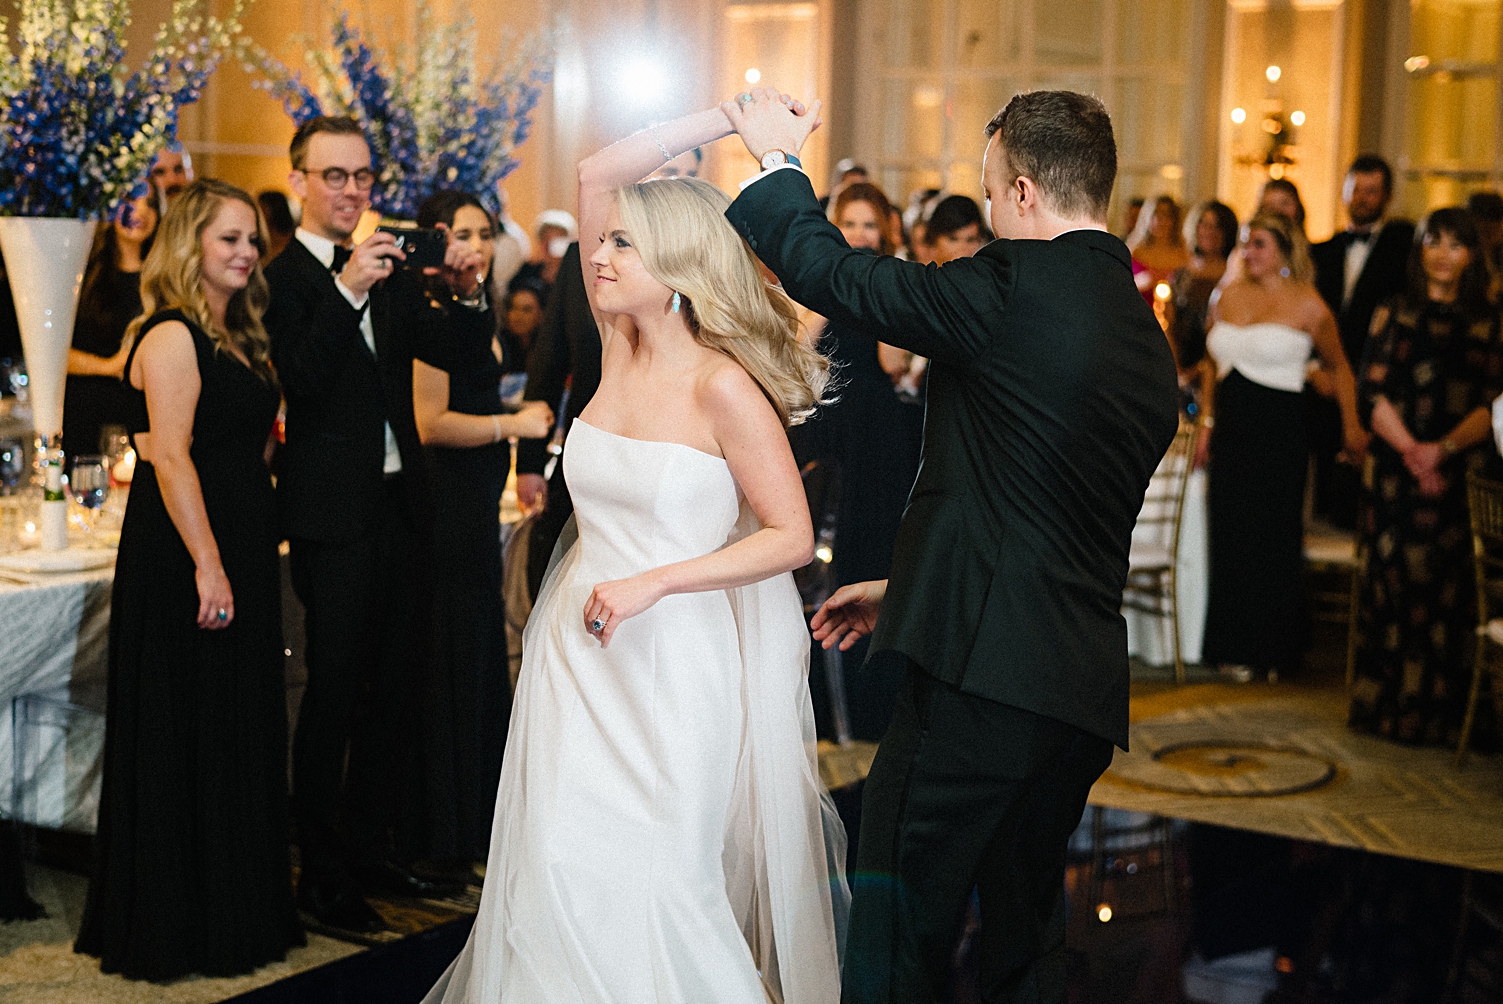 adolphus hotel wedding reception couple dancing spin